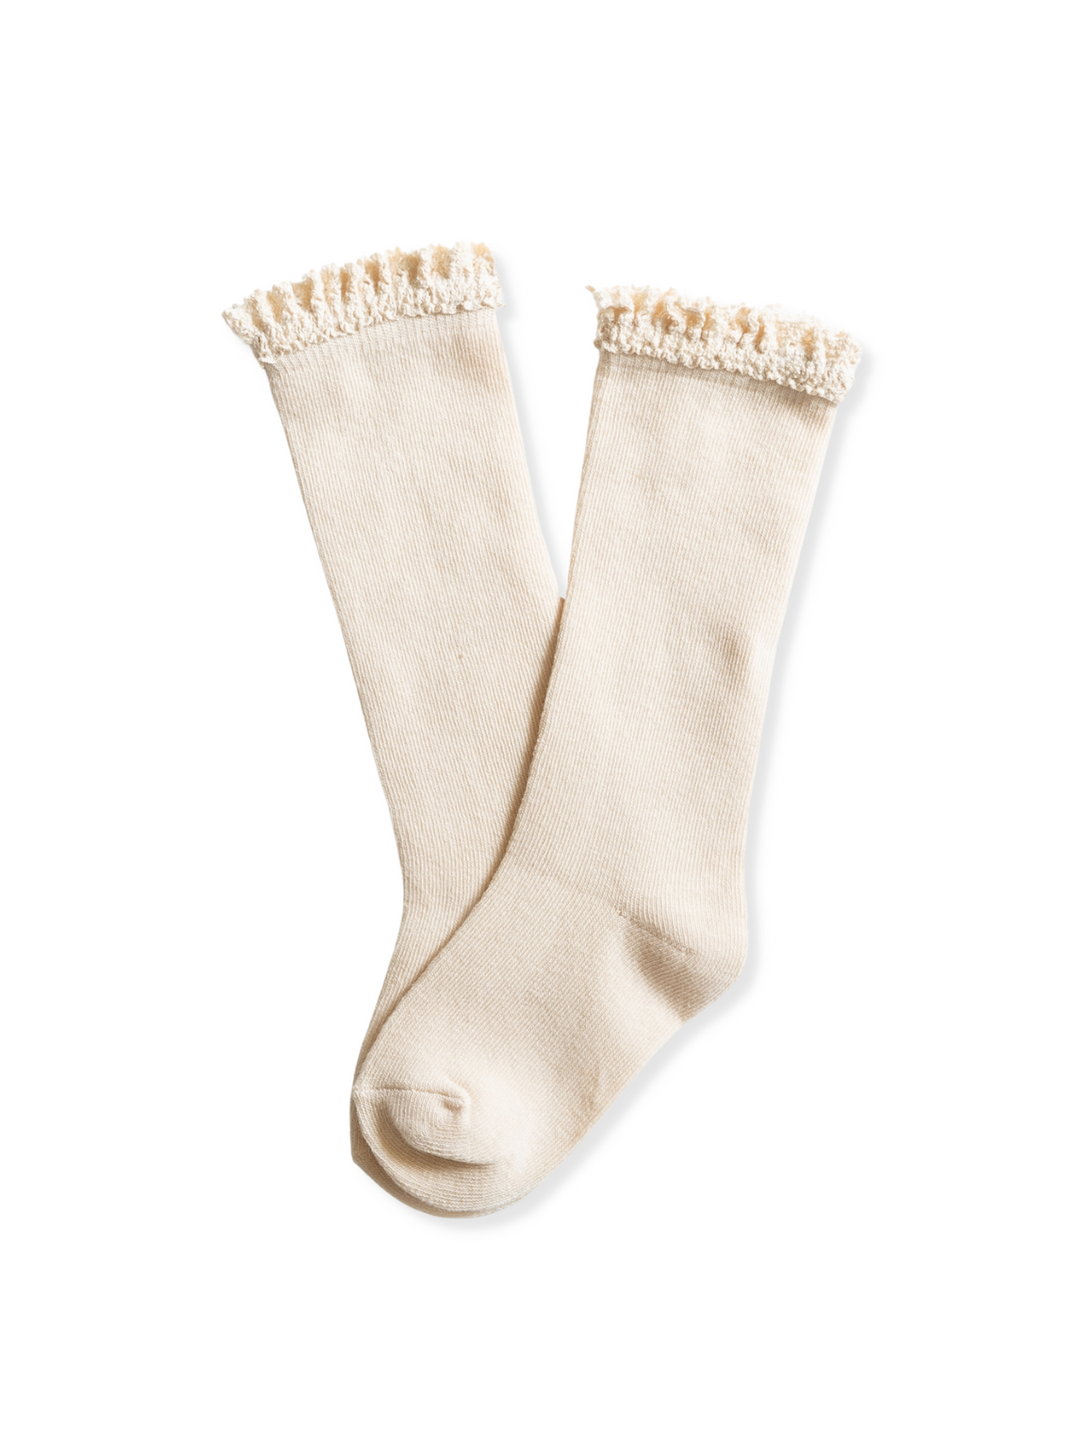 Lace Top Knee High Socks - Vanilla Cream | Little Stocking Co.